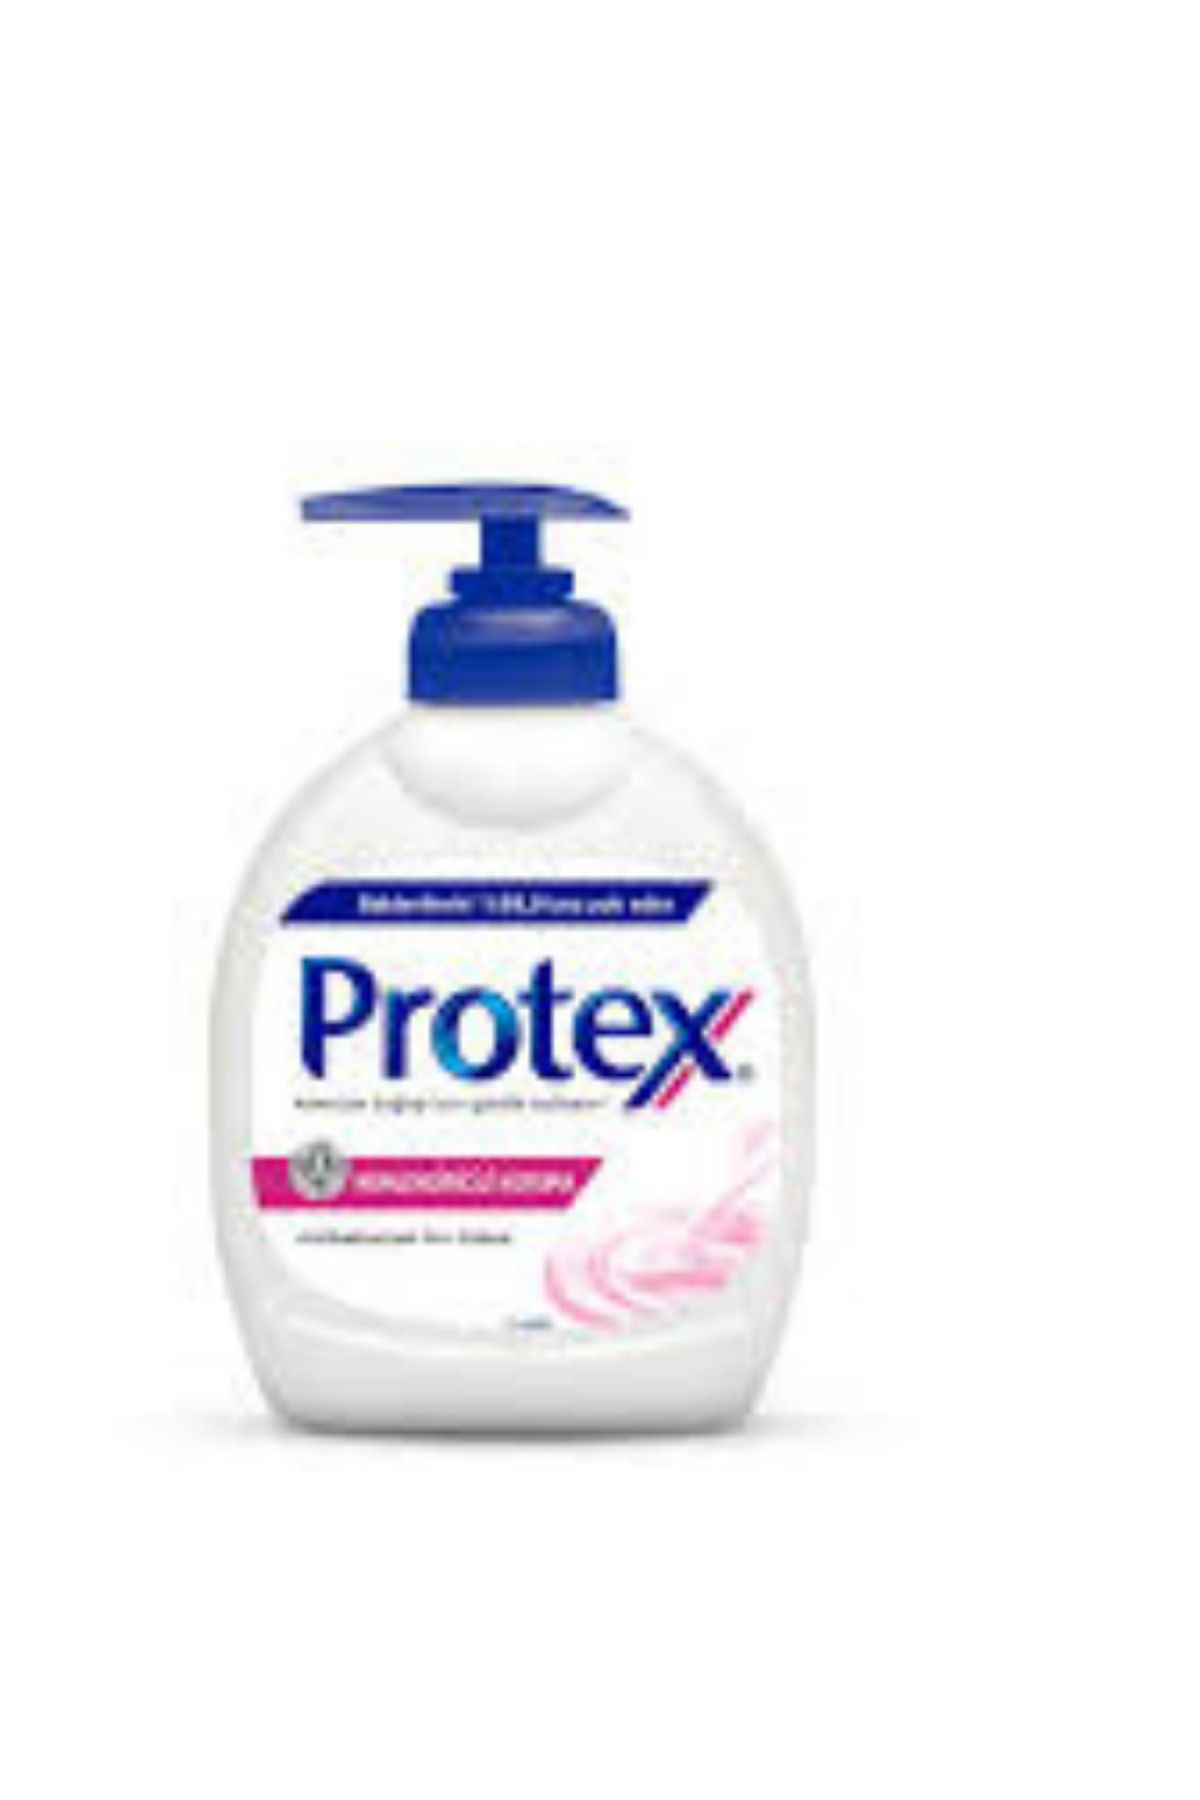 Protex Cream Nemlendiricili 300 ml Sıvı Sabun